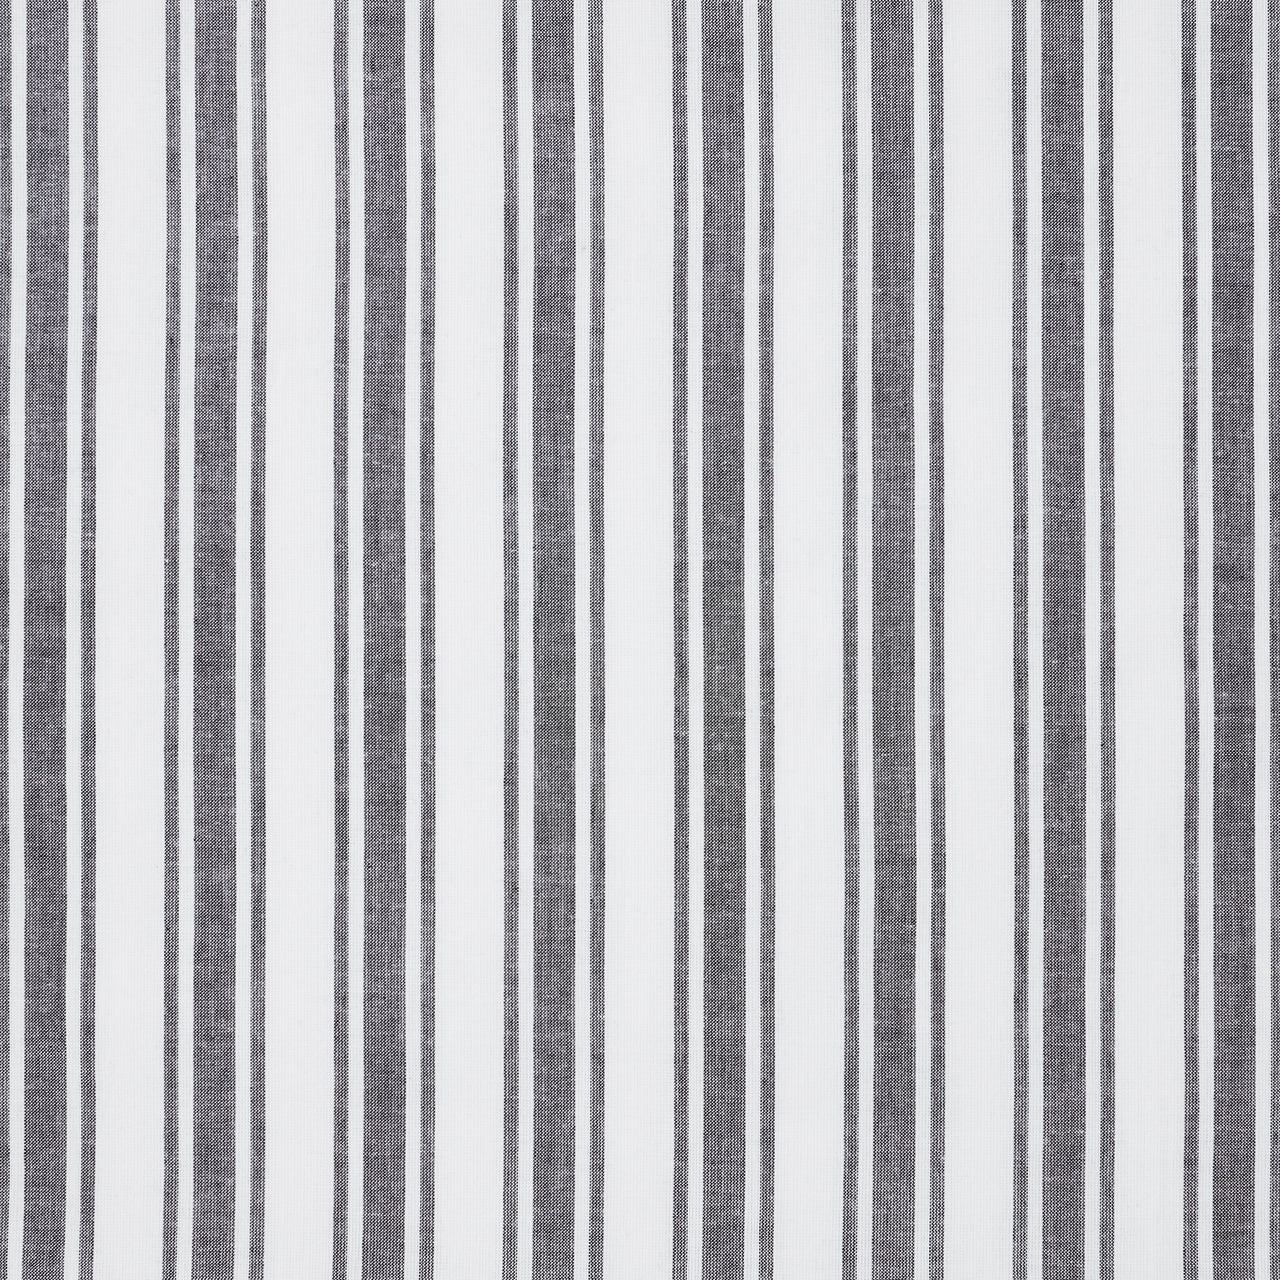 Sawyer Mill Black Ruffled Ticking Stripe Standard Pillow Case Set of 2 VHC Brands